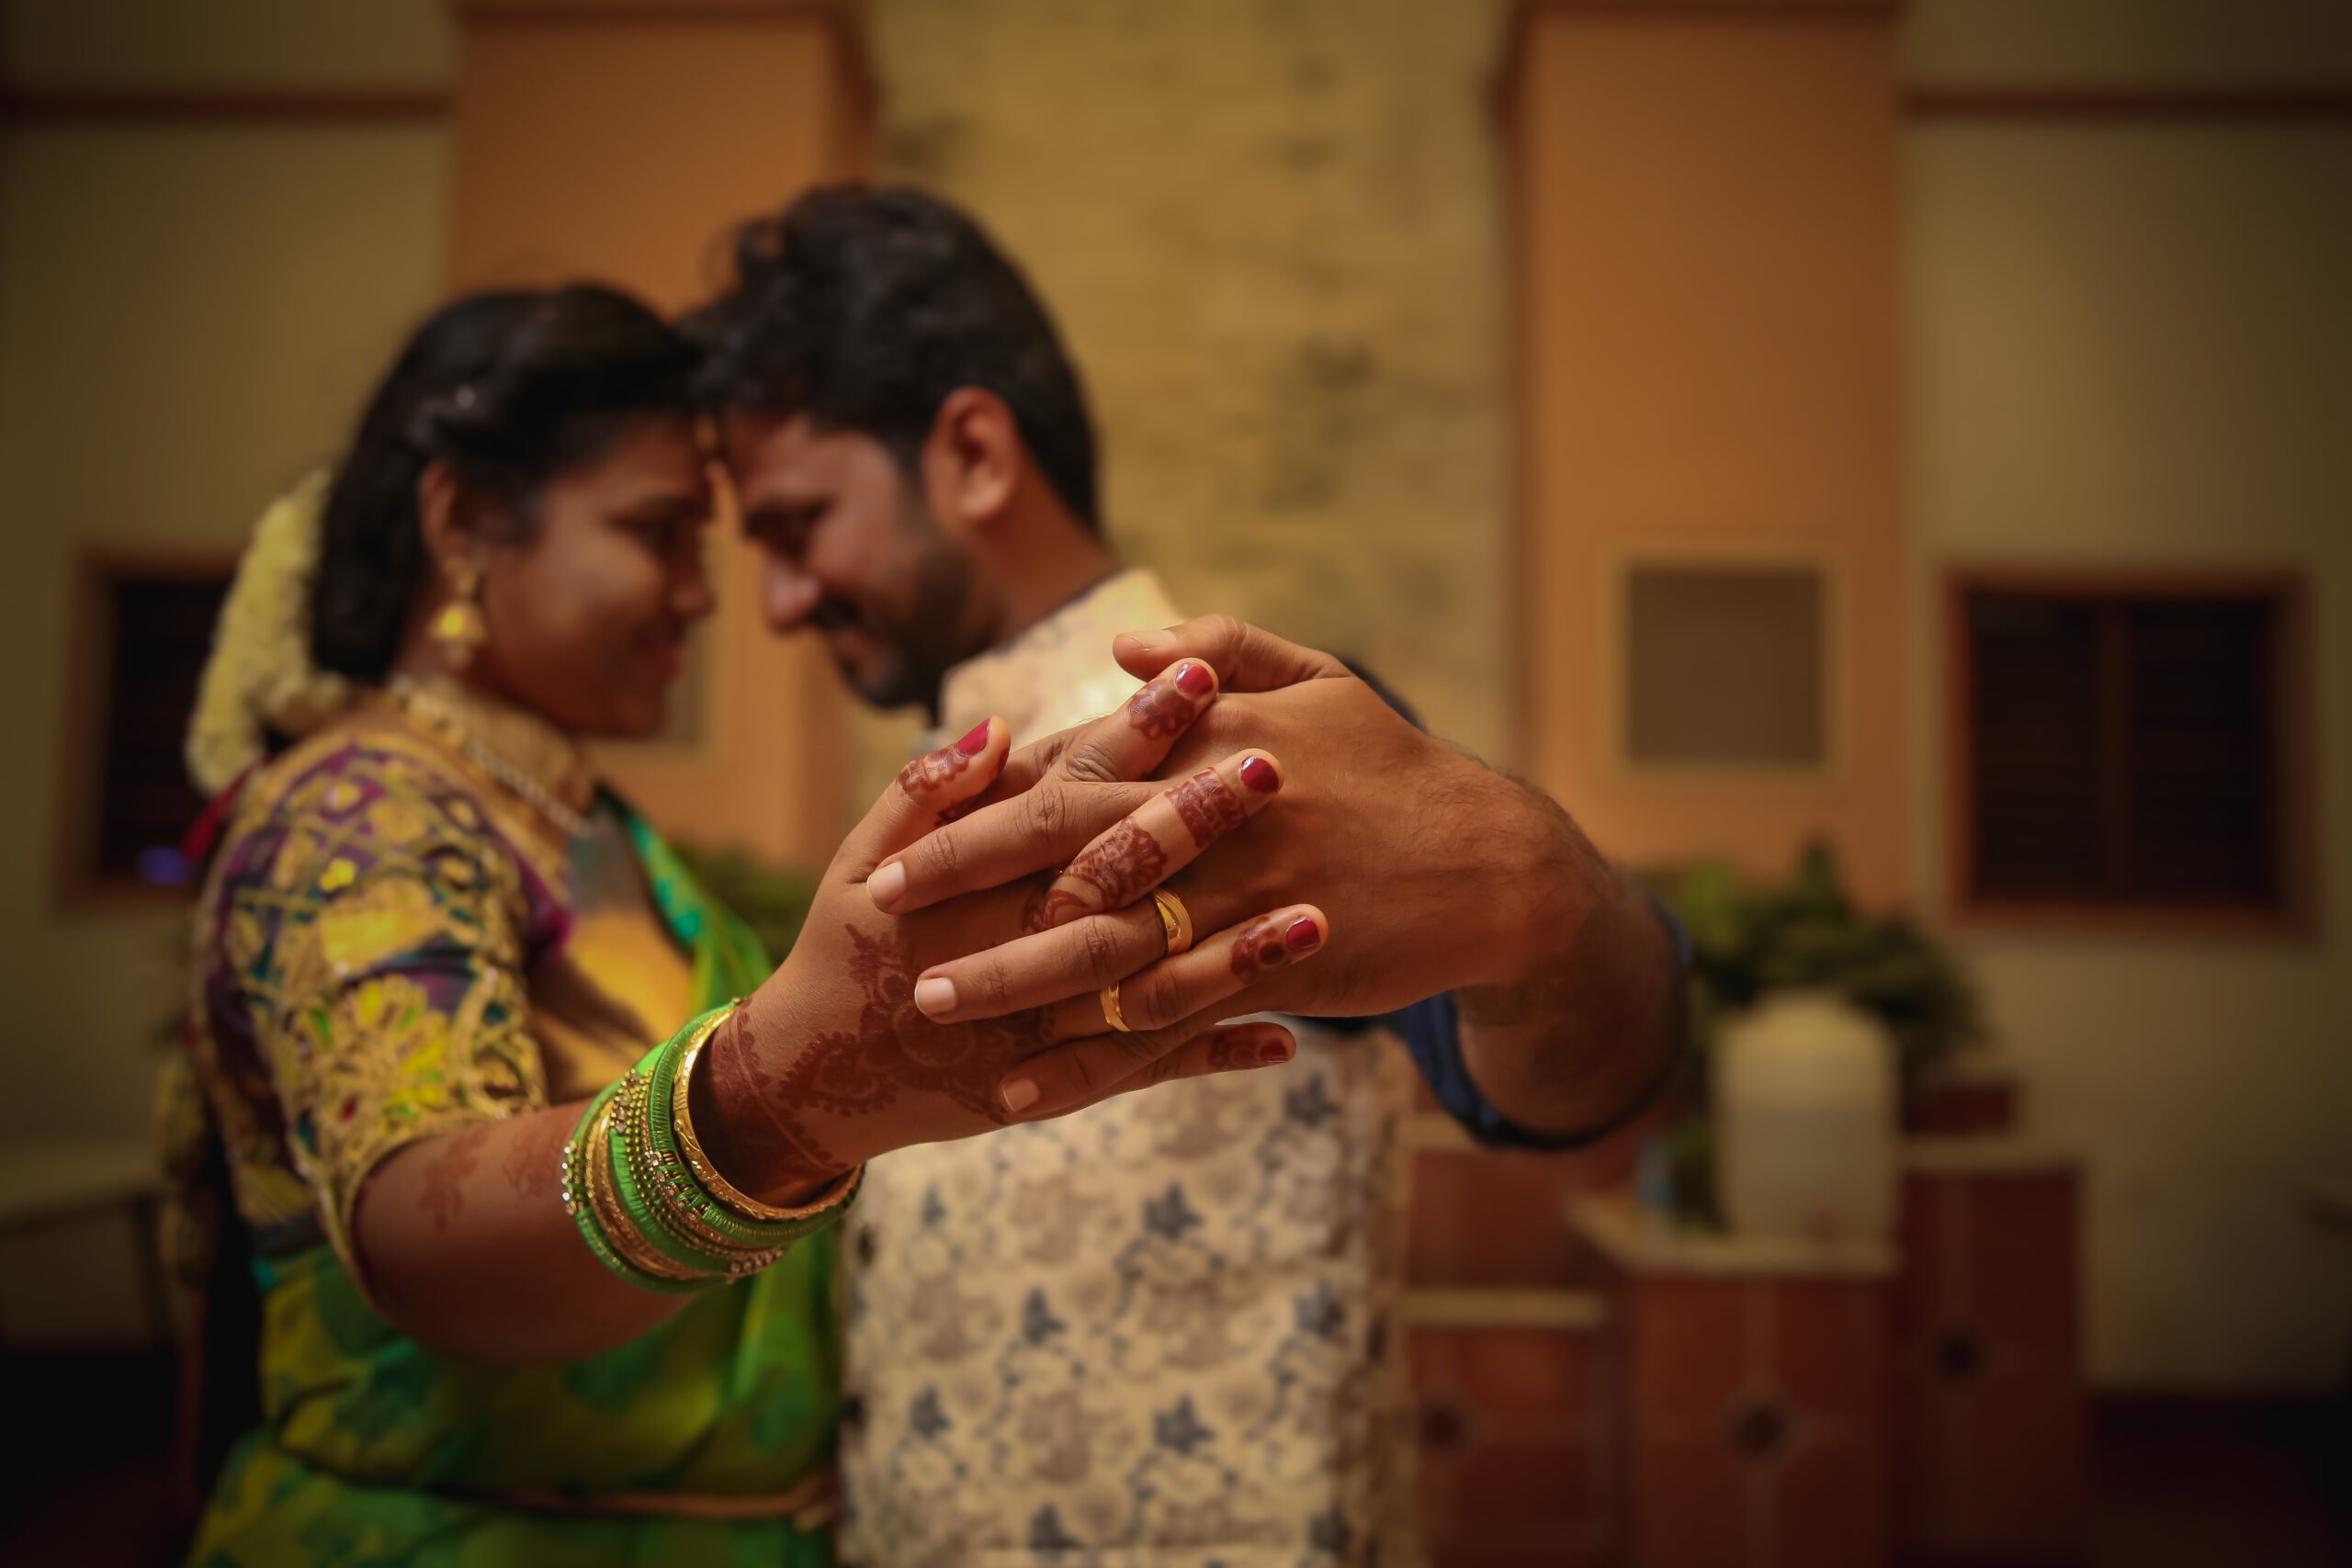 Wedding Rings Blog - Best Indian Wedding Blog | WeddingBazaar